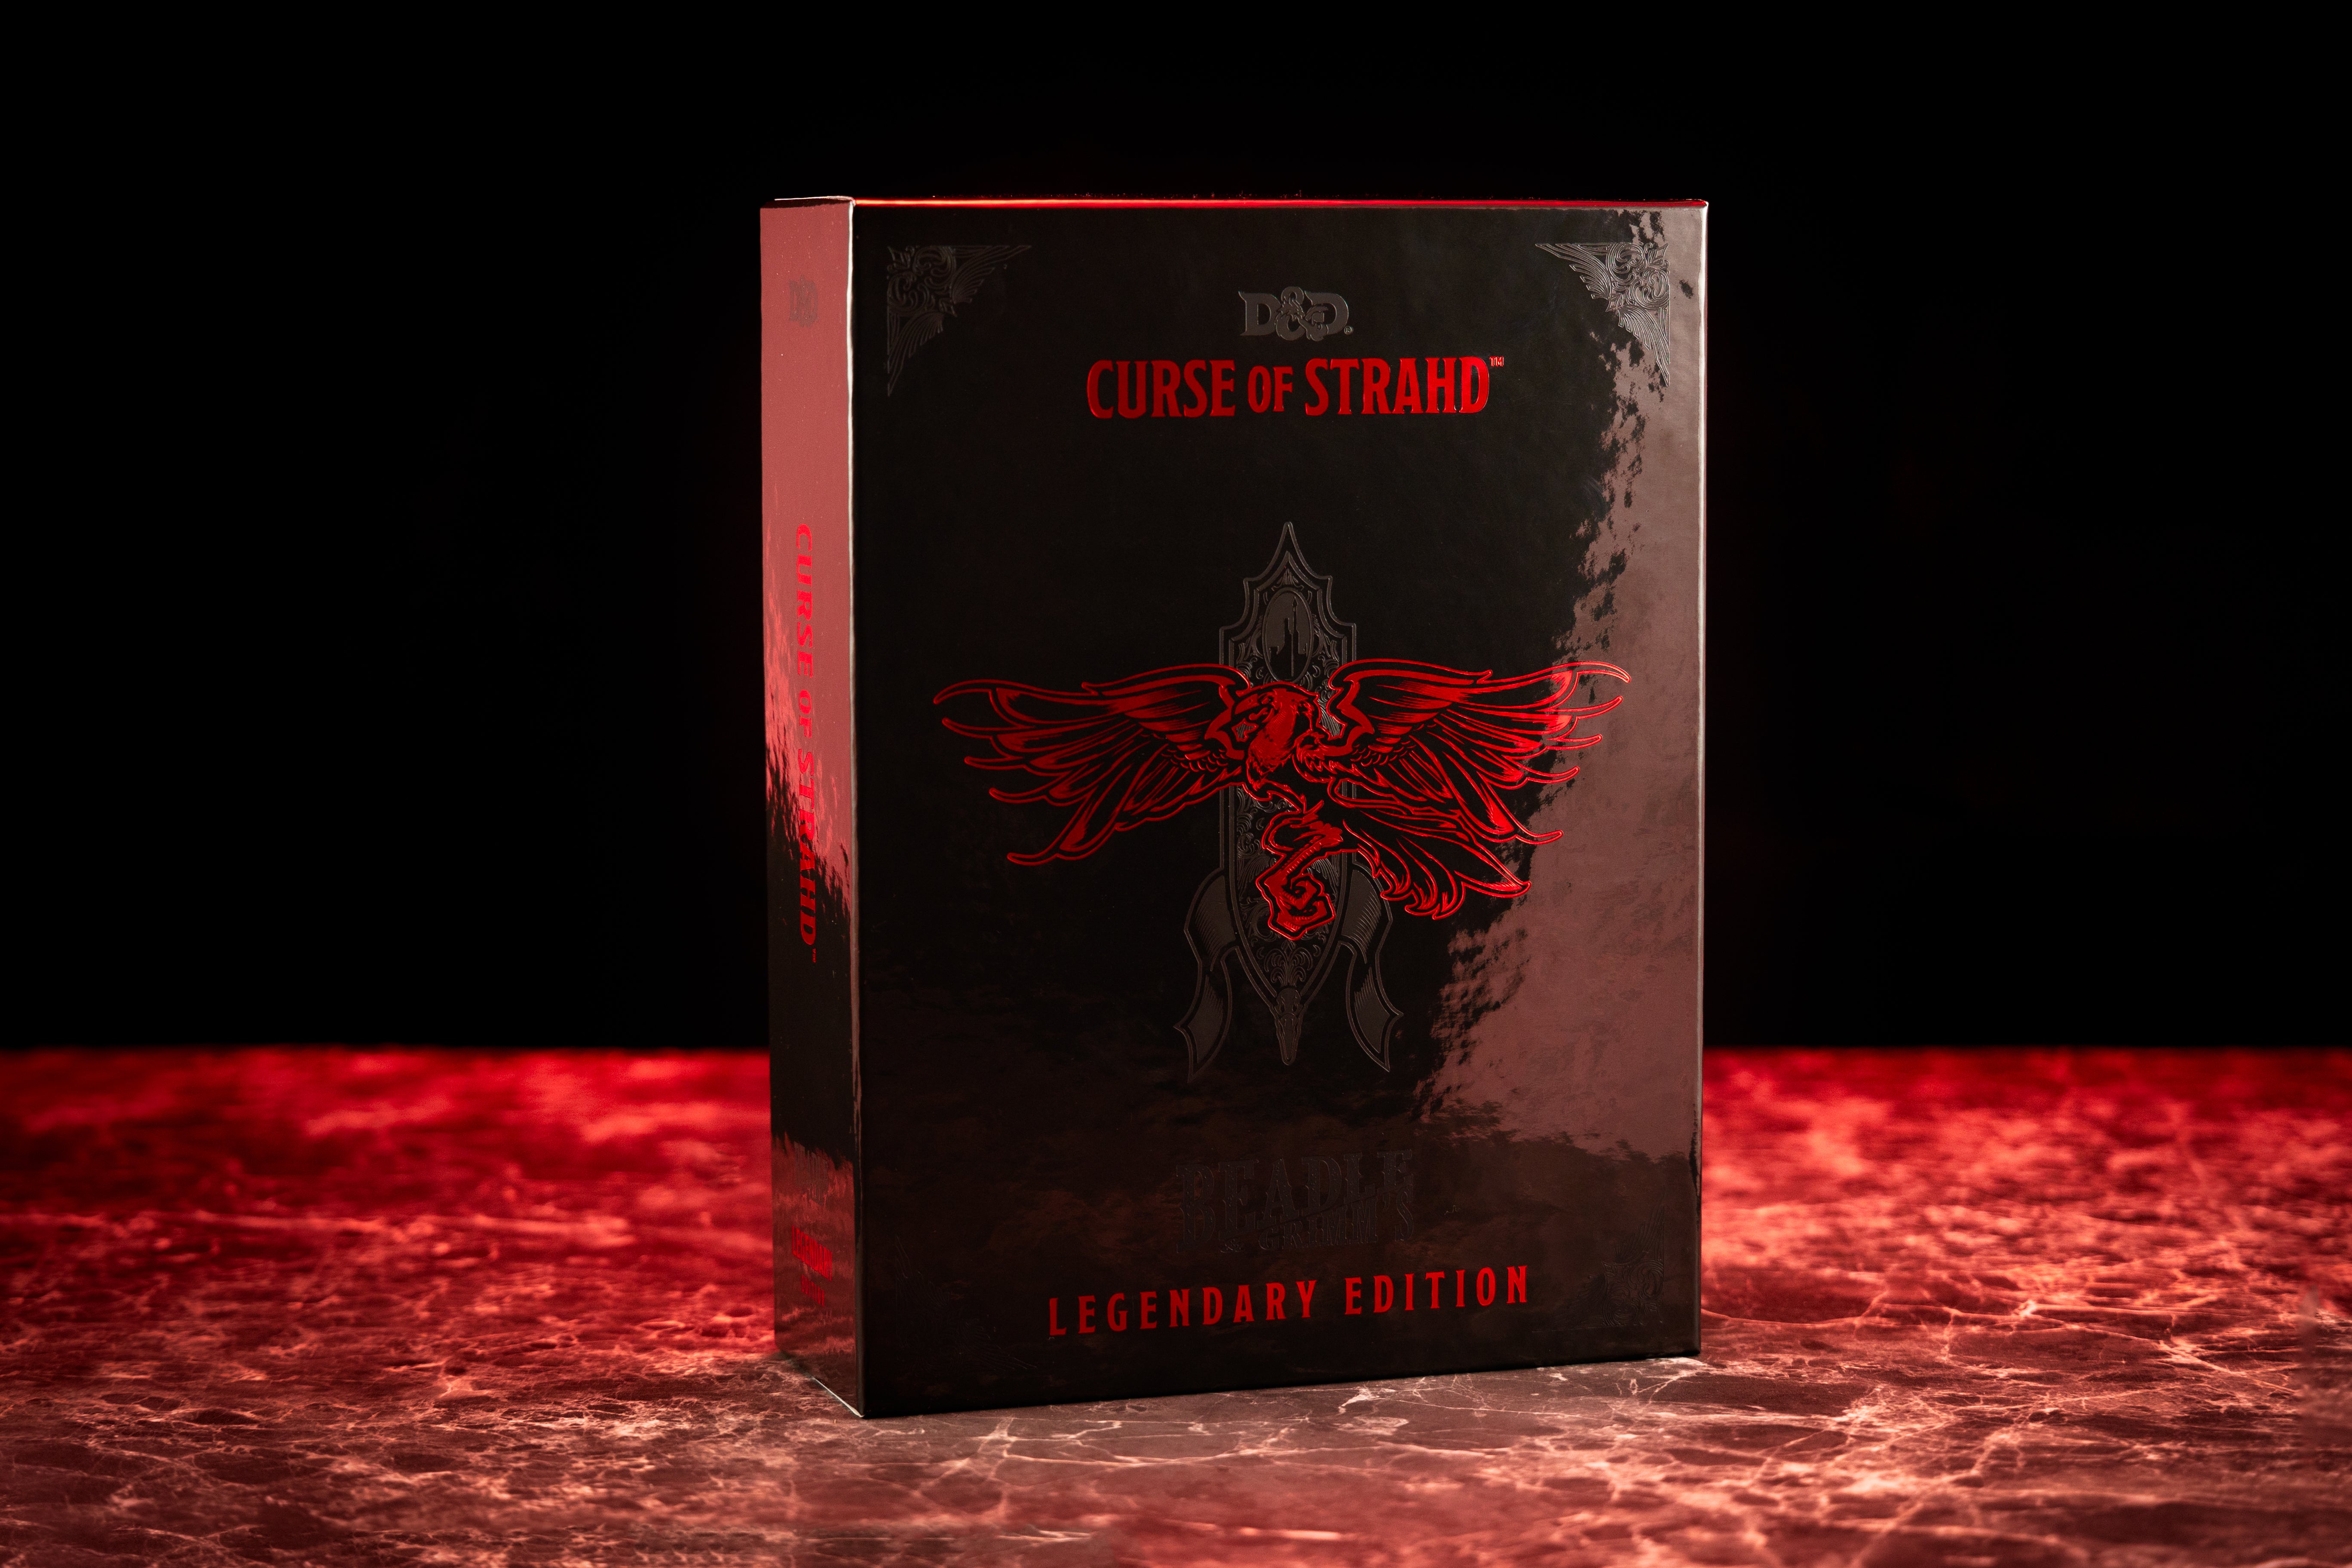 Legendary Edition of Curse of Strahd